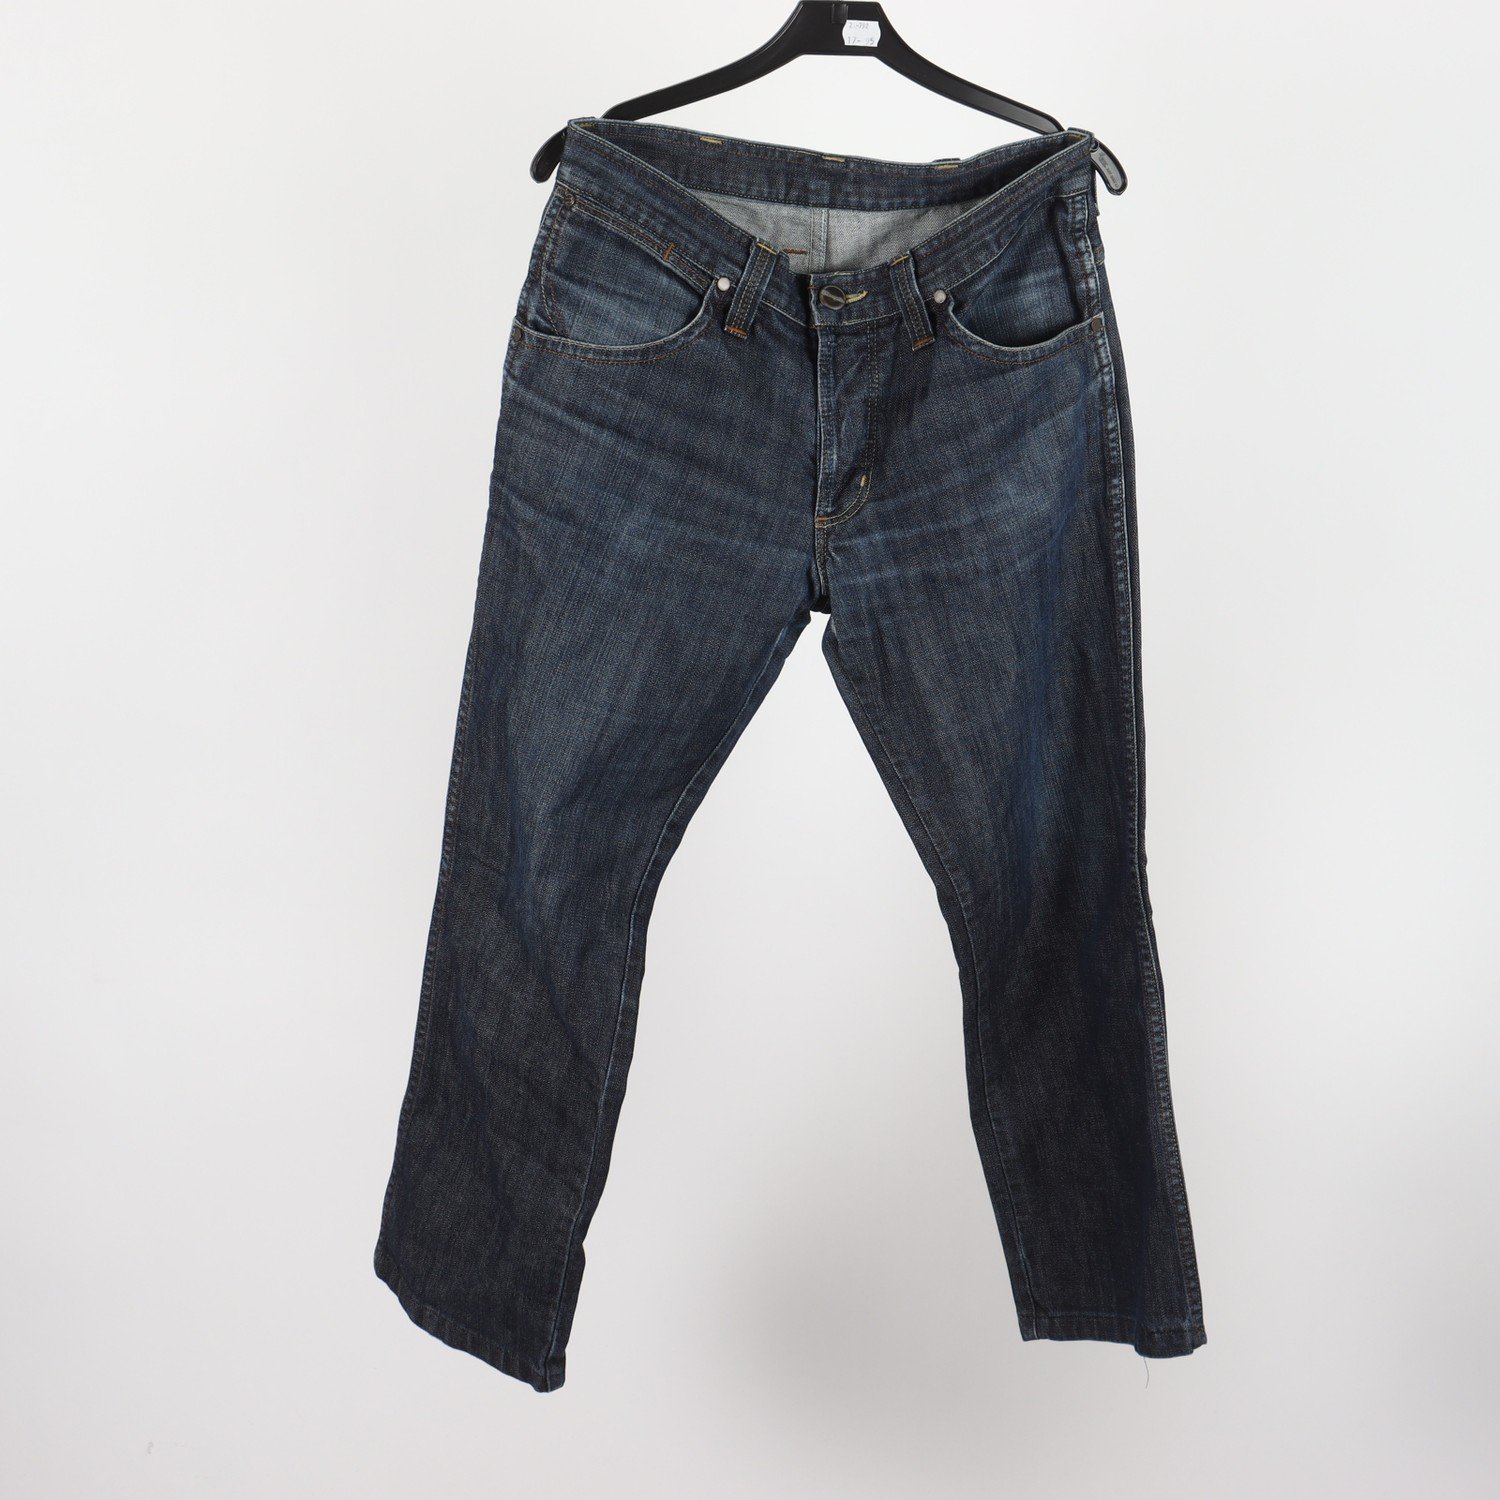 Jeans, Wrangler, vintage, stl. 32/32